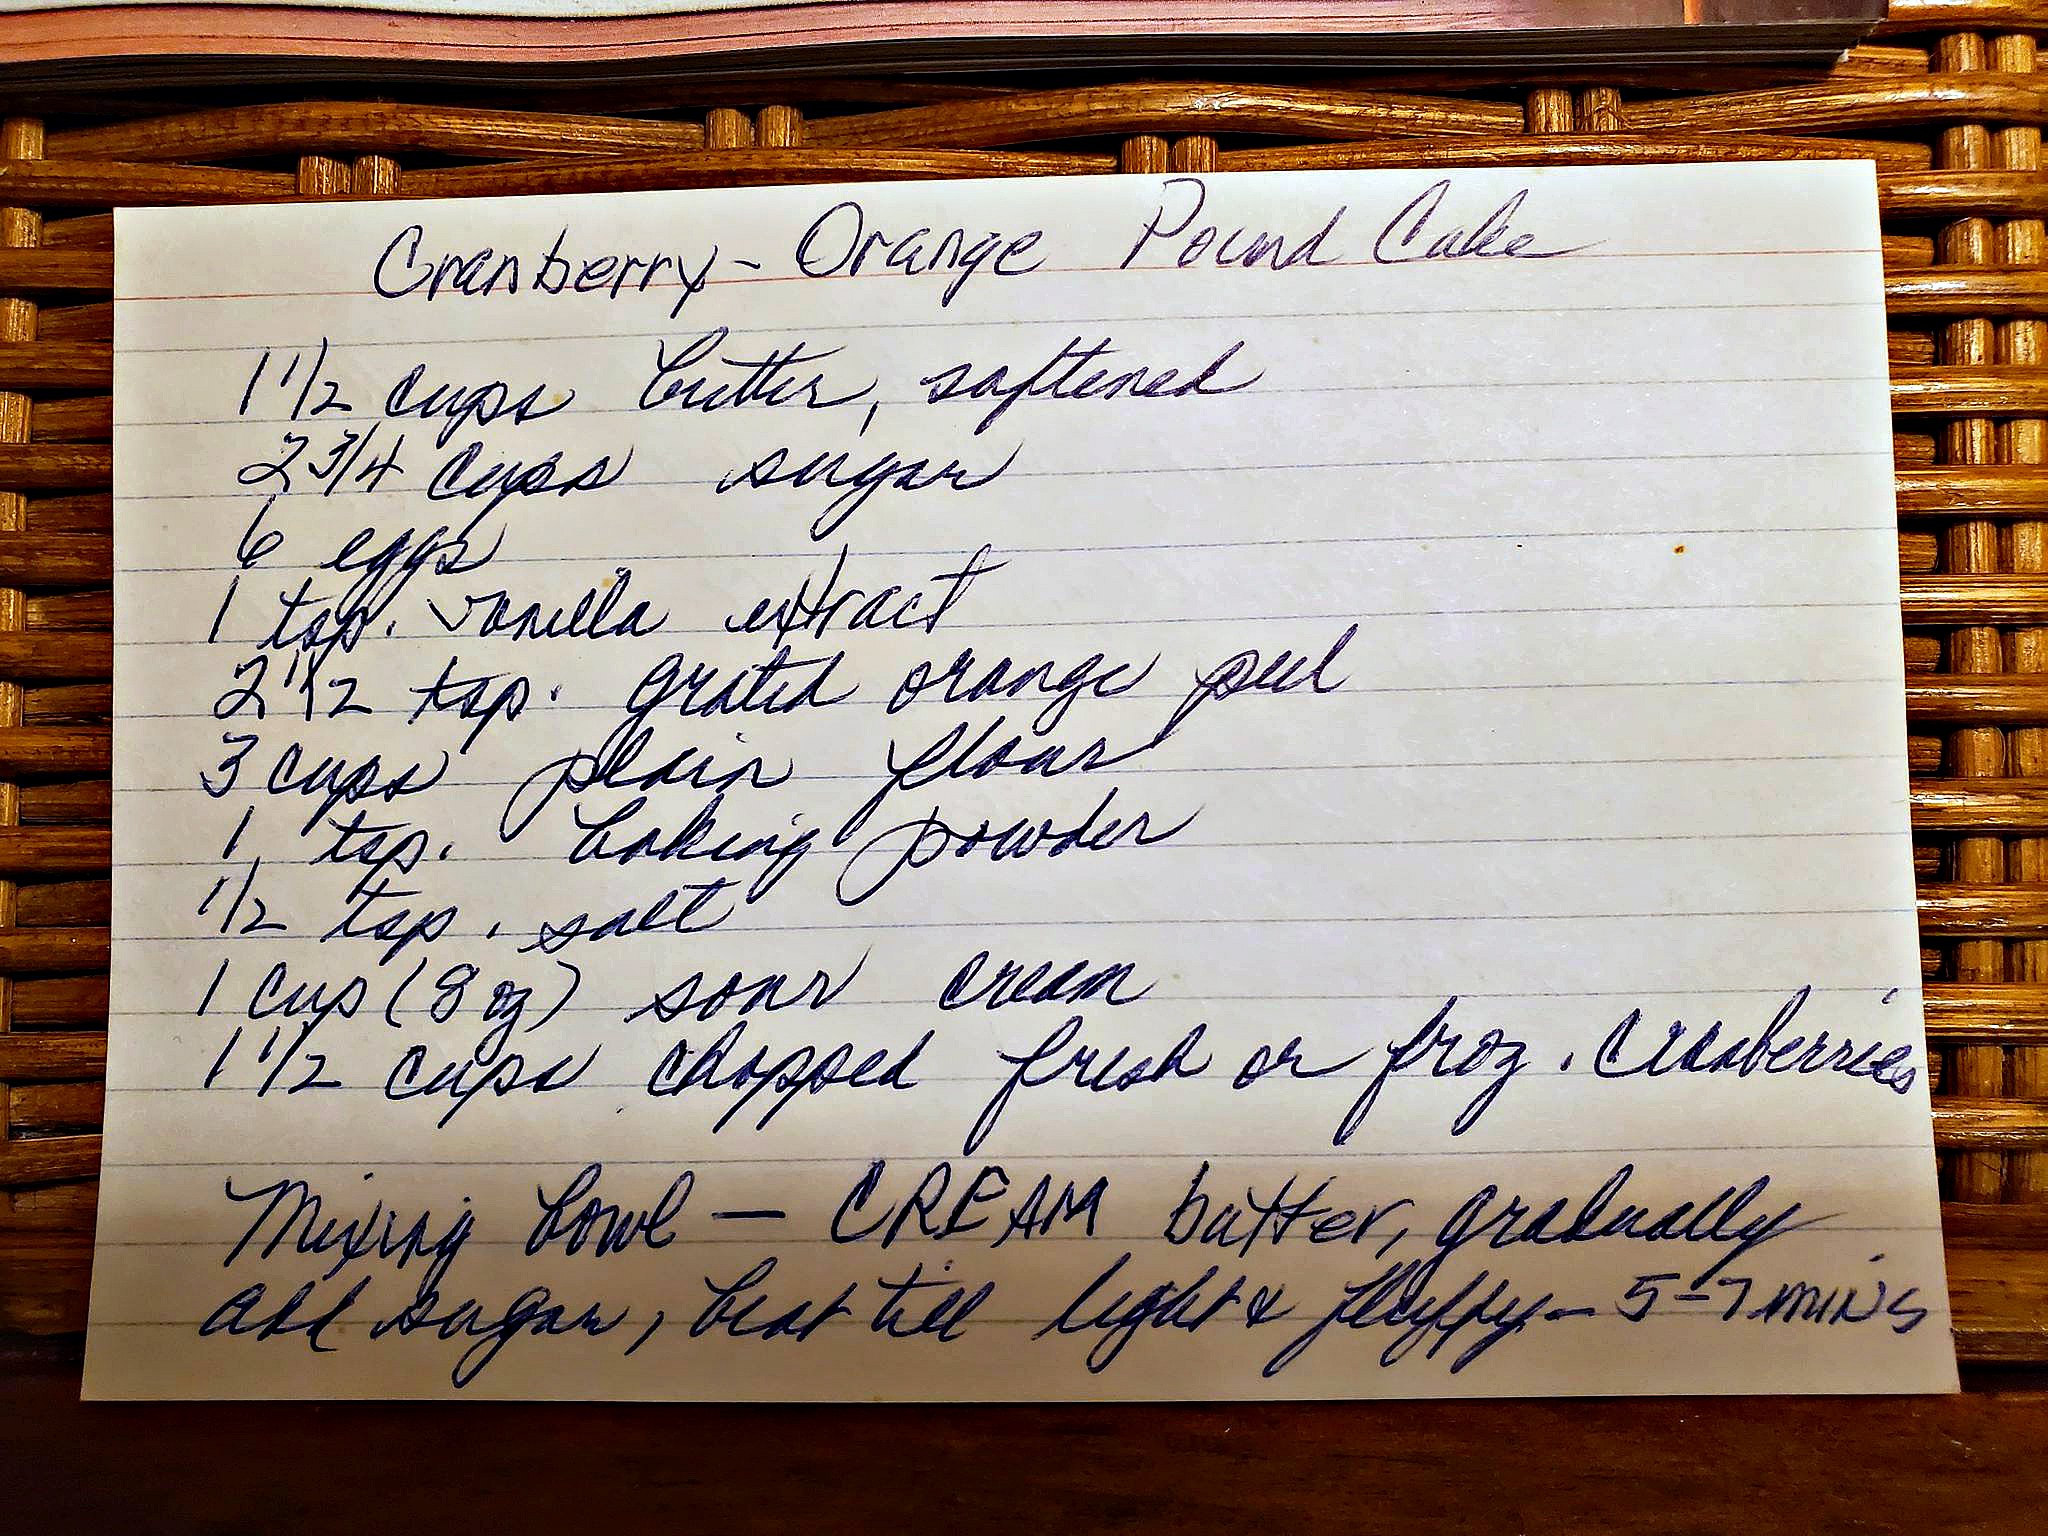 Hand written recipe card for cranberry orange pound cake recipe card sitting on wicker basket.